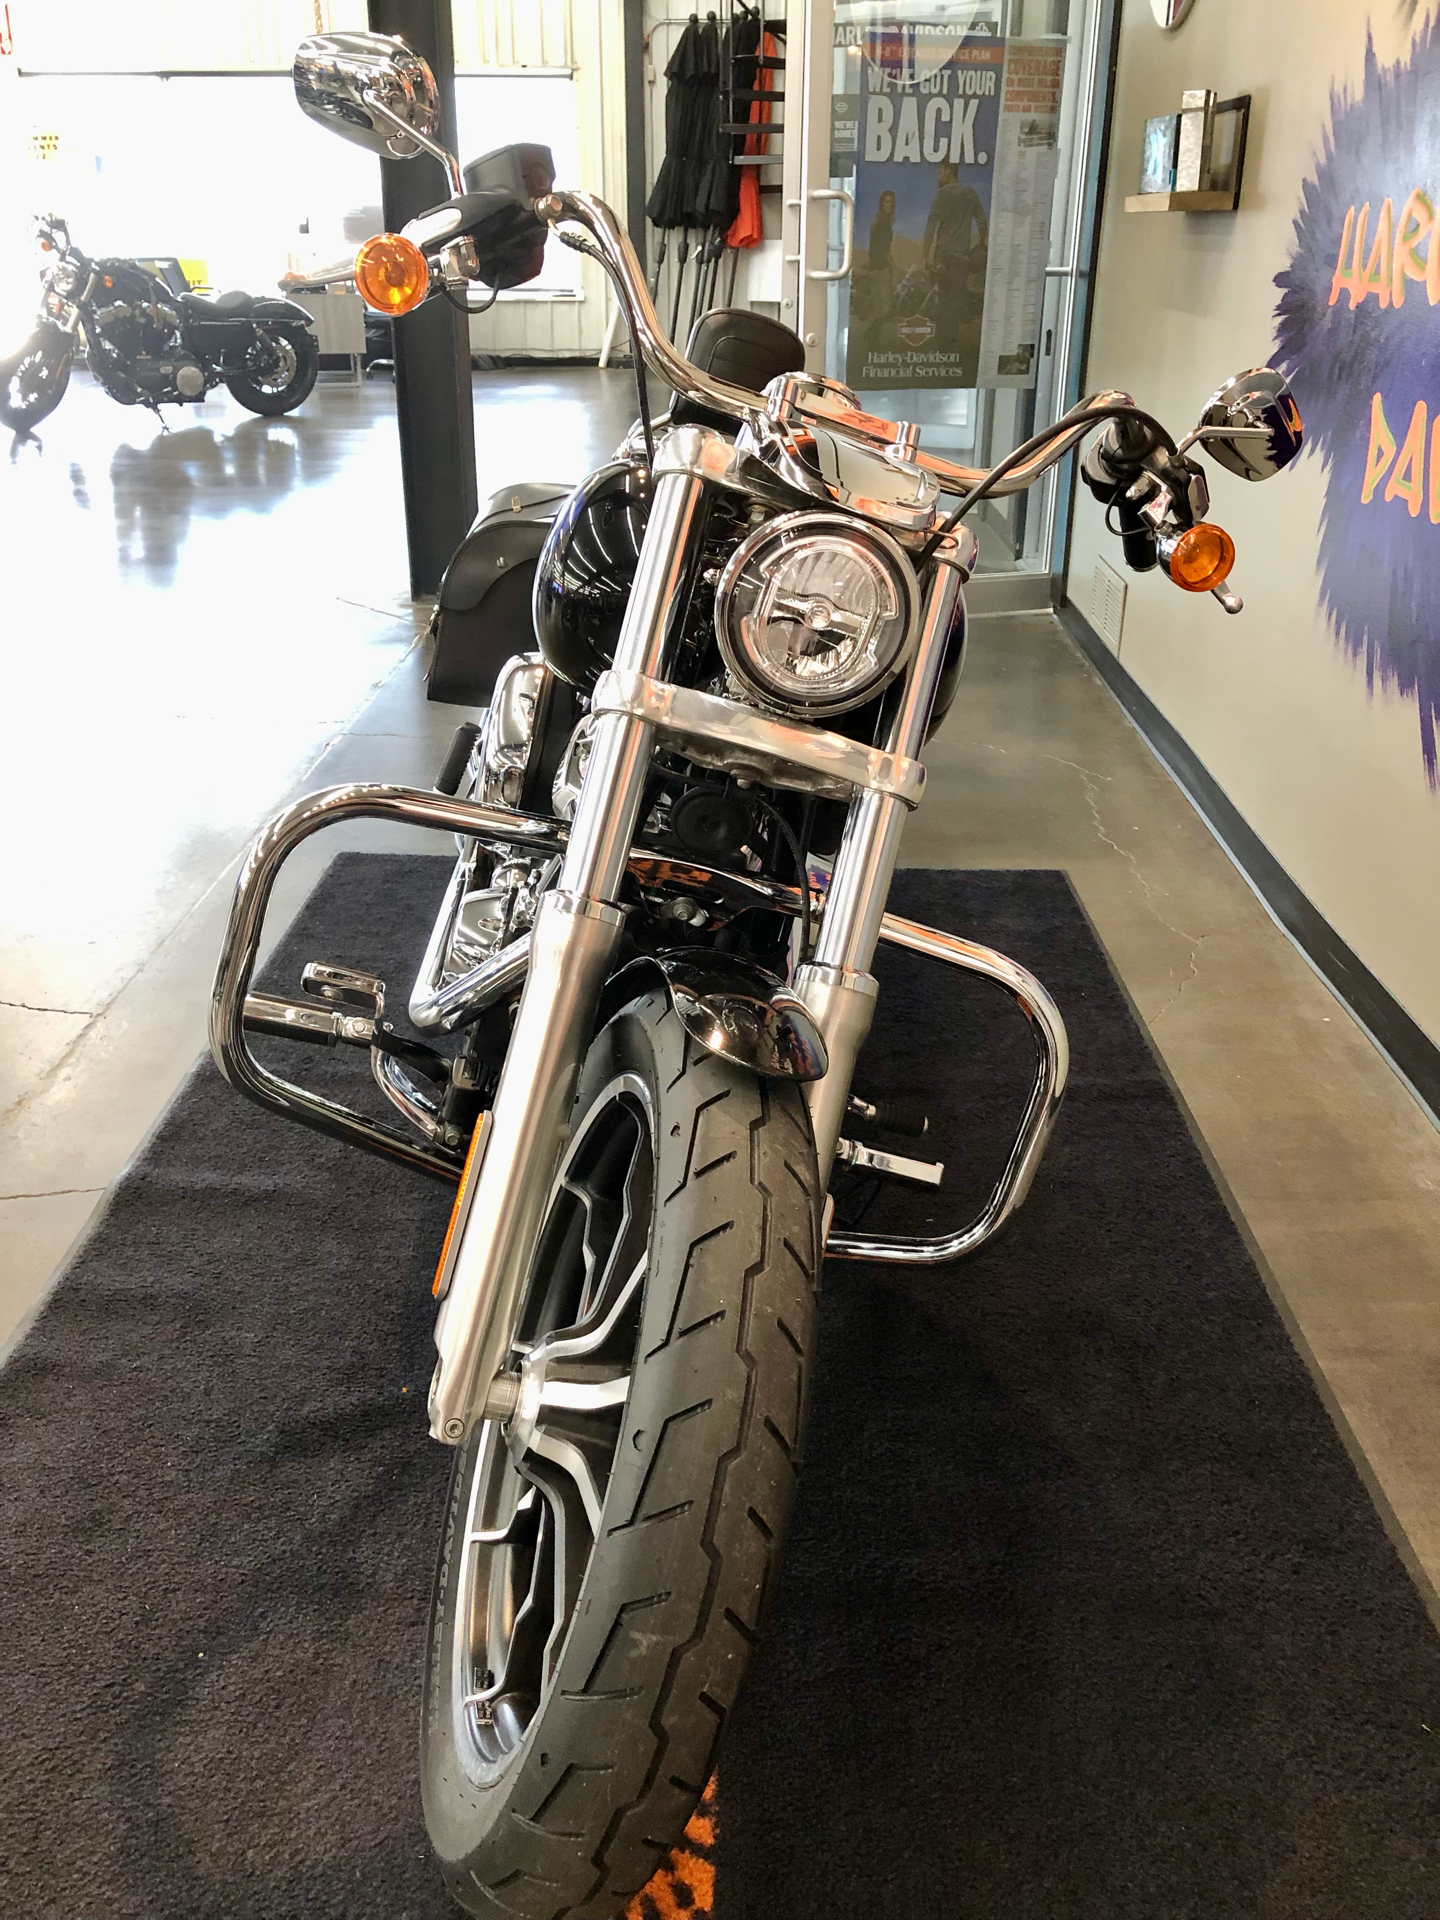 2018 Harley-Davidson Low Rider® 107 in Upper Sandusky, Ohio - Photo 2